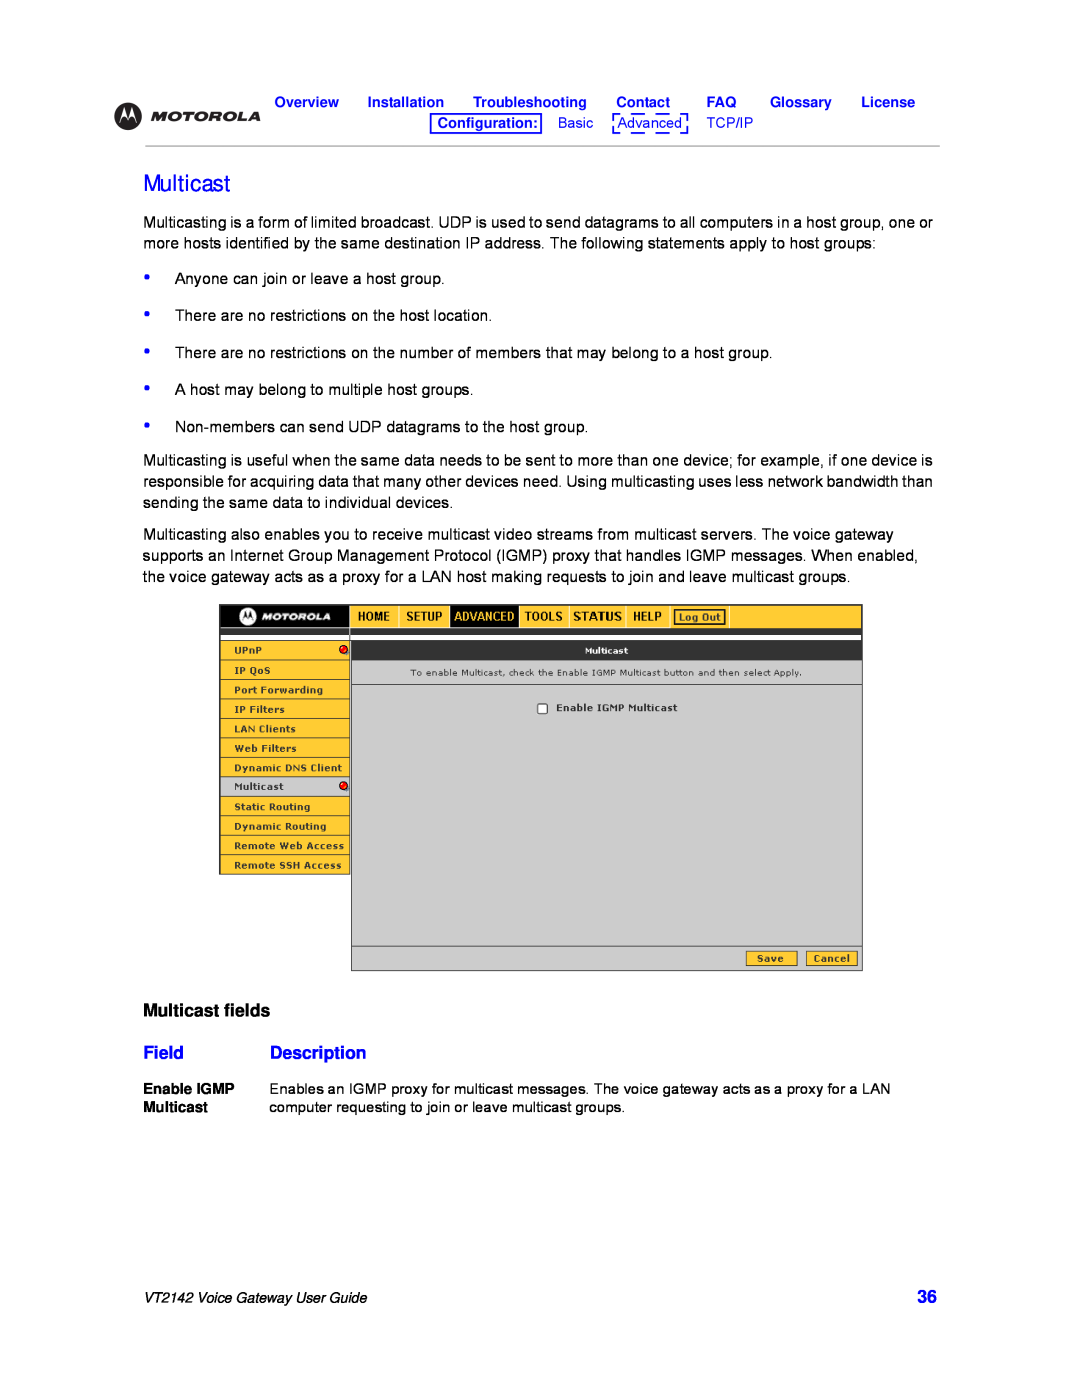 Motorola VT2142 manual Multicast fields, Field, Description 